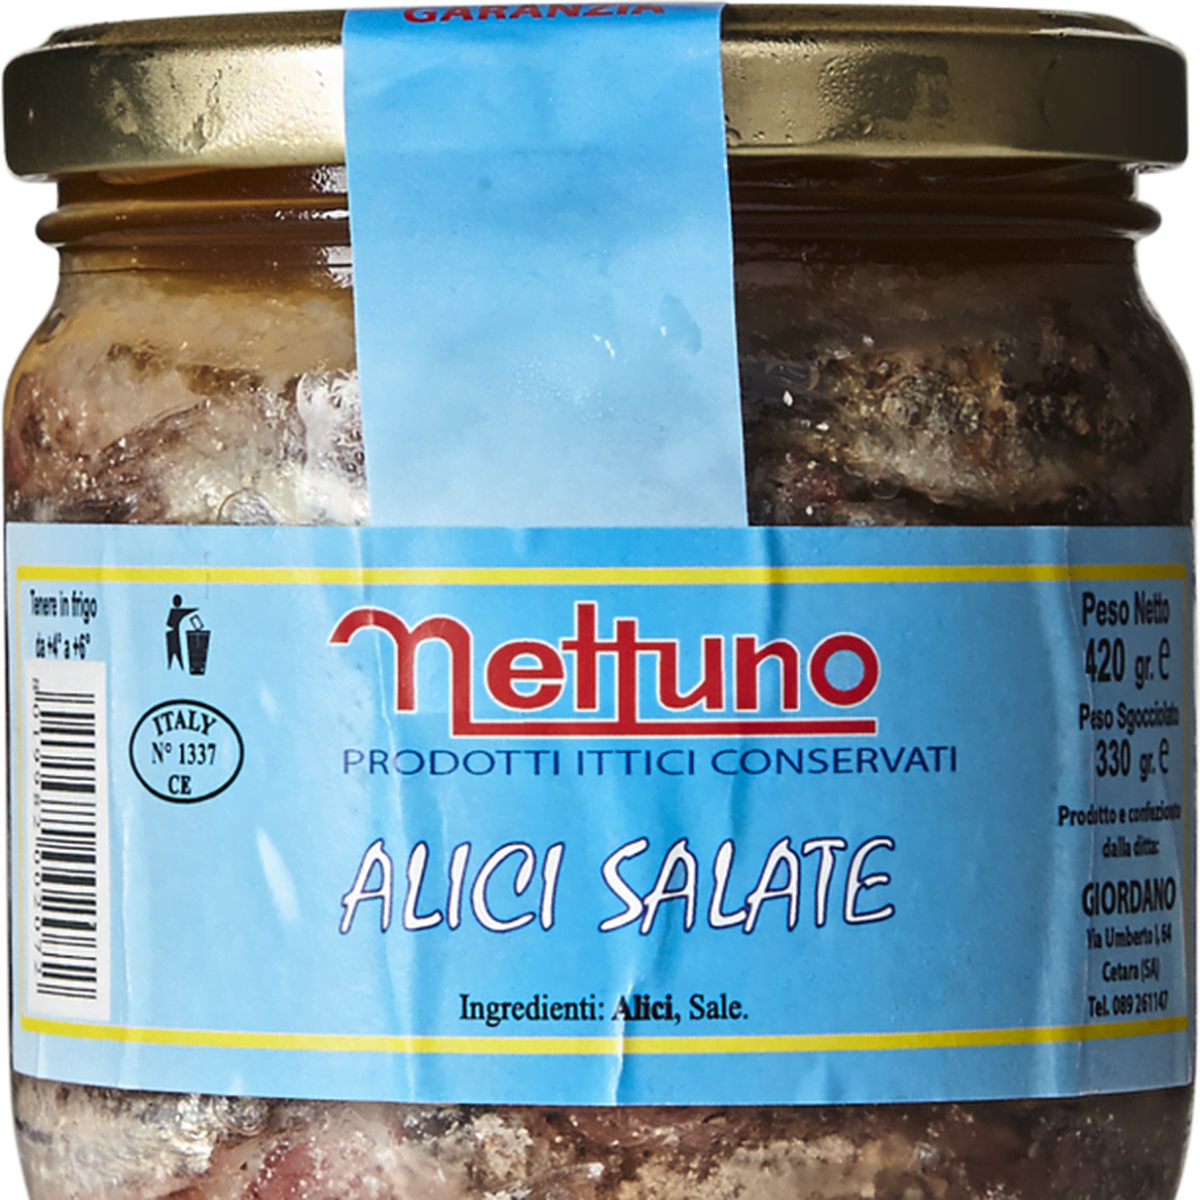 A jar of Nettuno anchovies